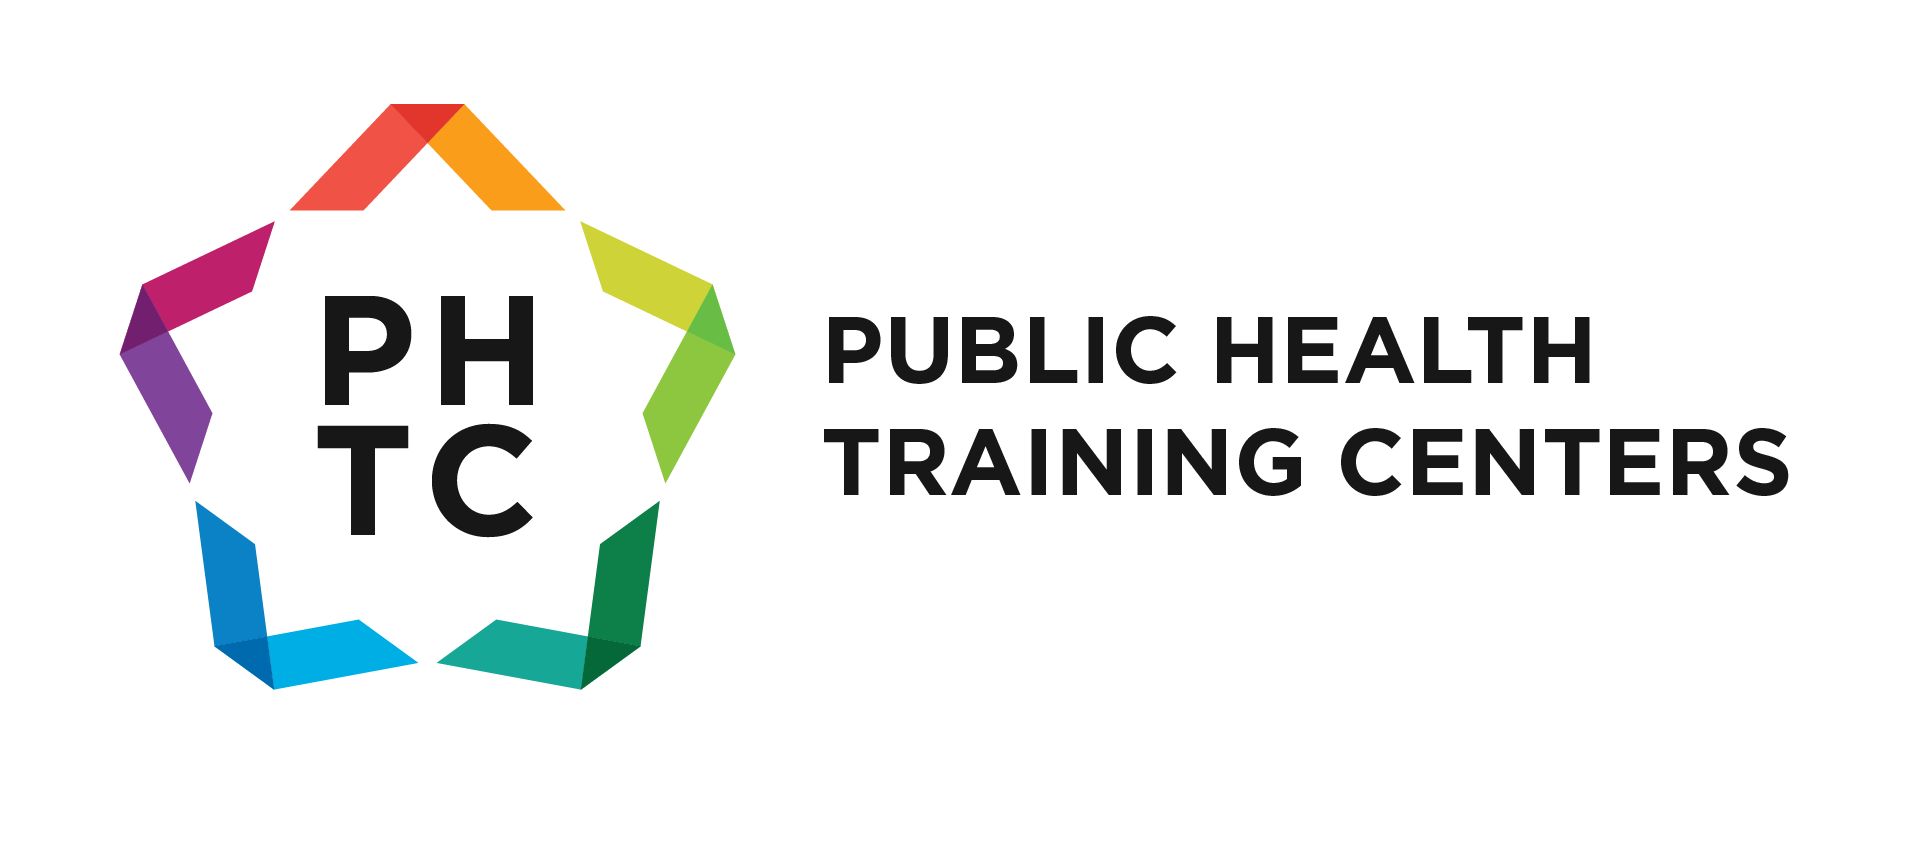 PHLN Public Health Learning Navigator Quality Seal 